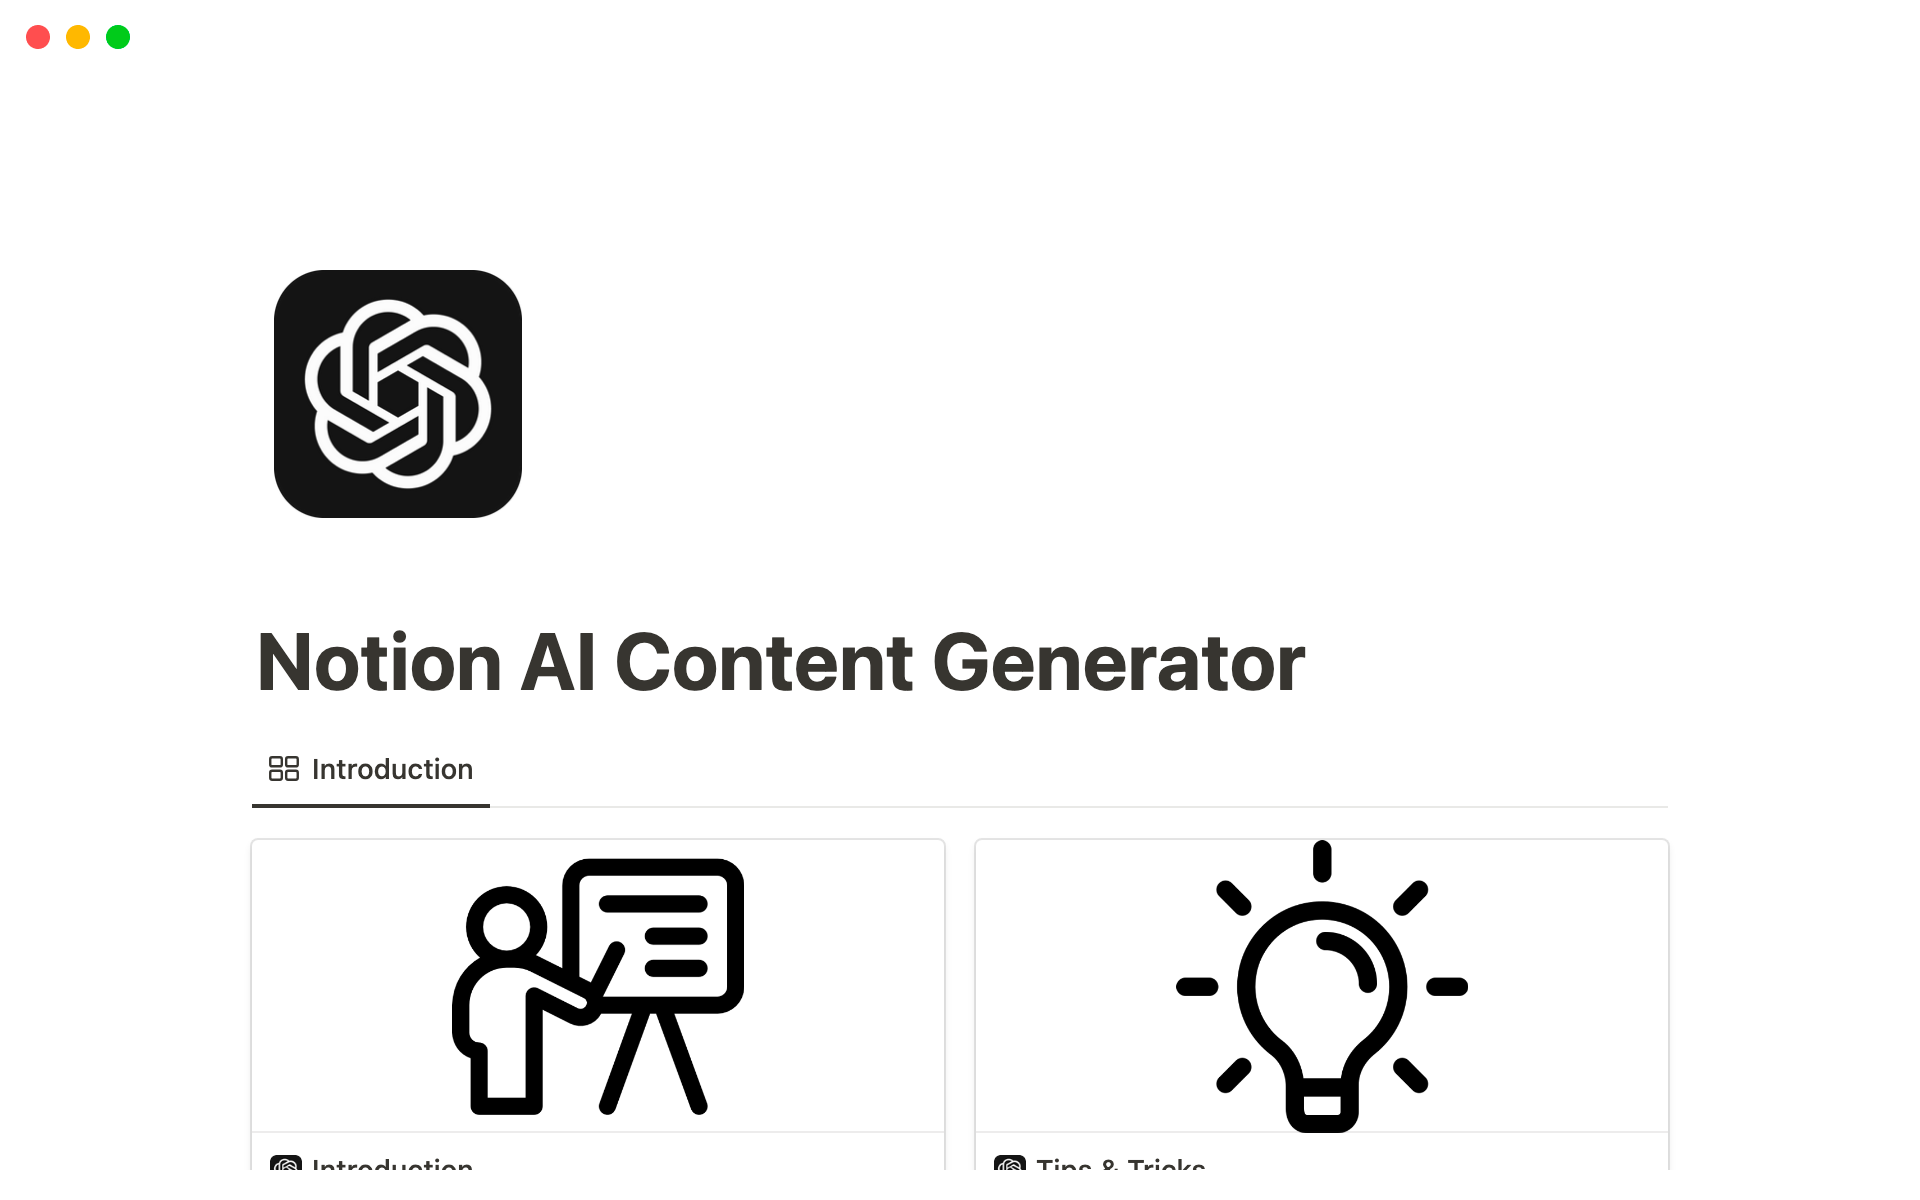 Vista previa de plantilla para Notion AI Content Generator